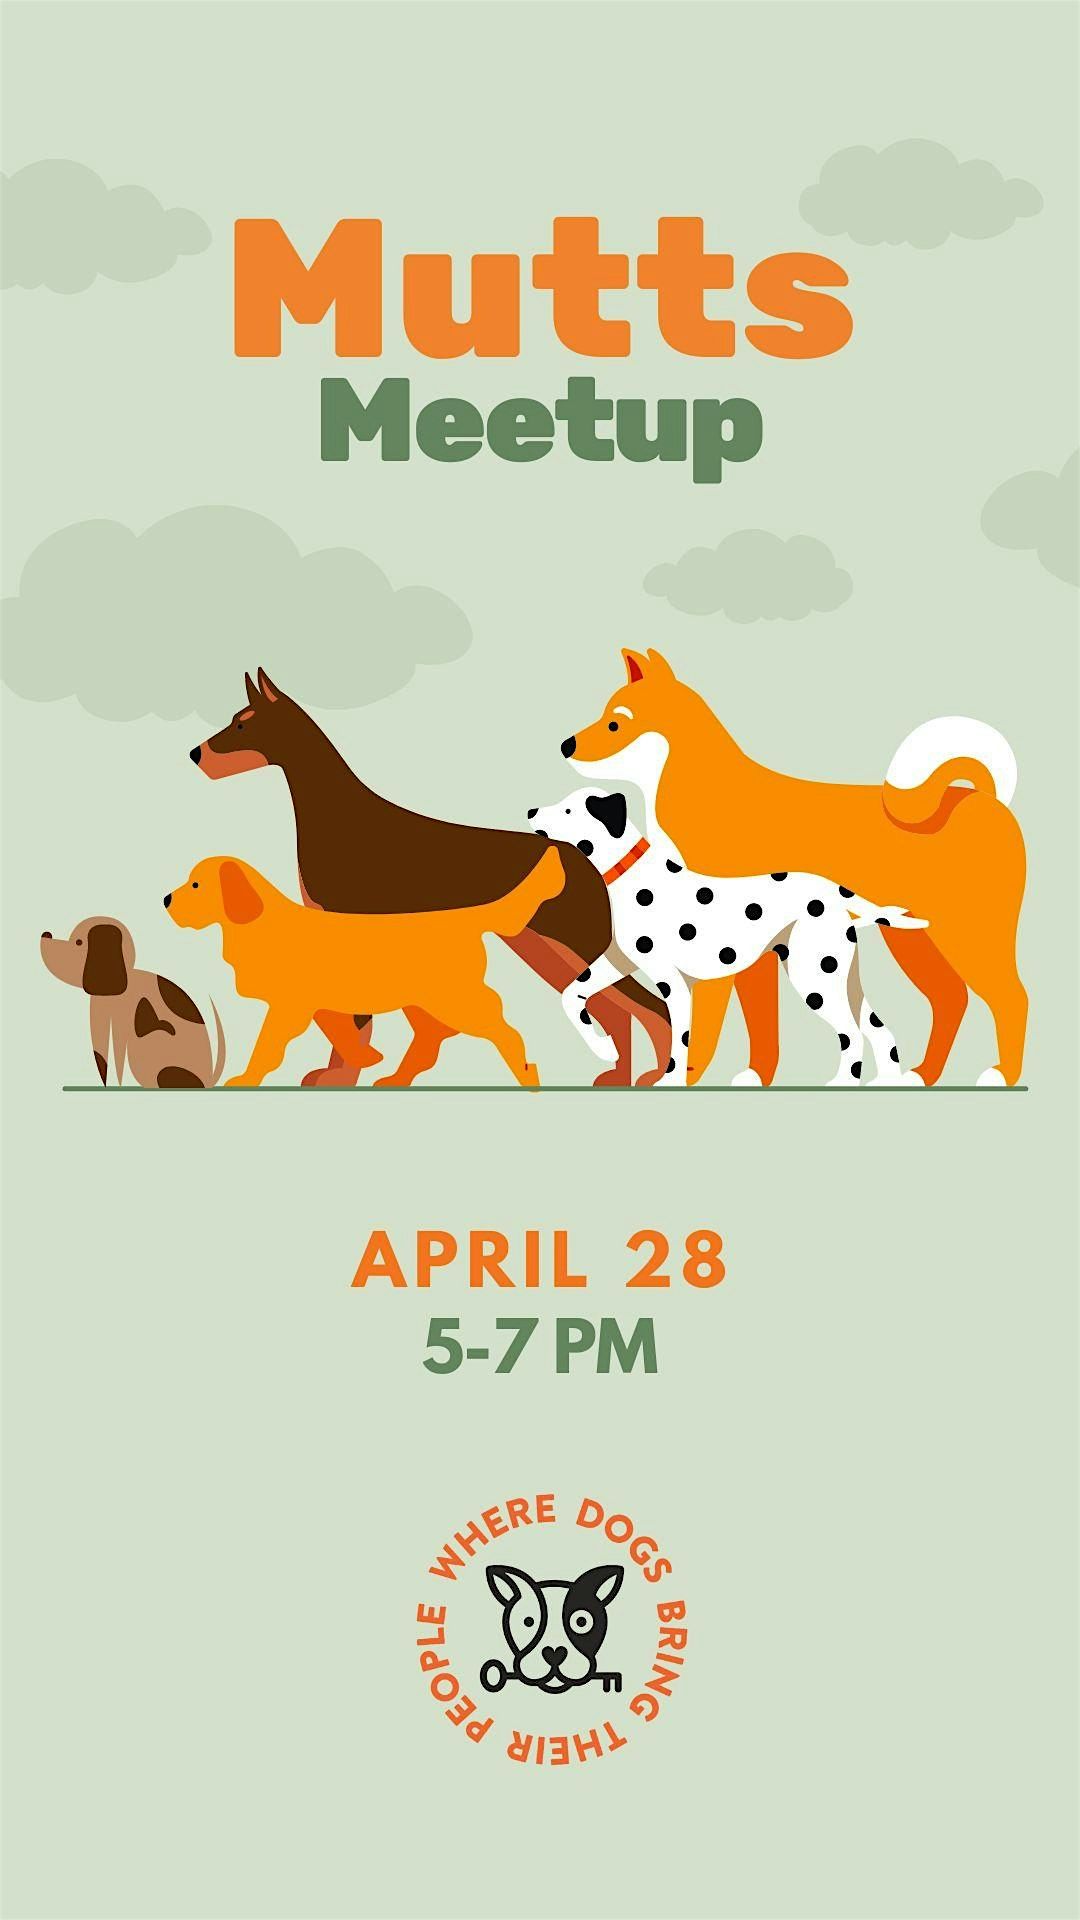 Mutts Meetup at The Dog Society